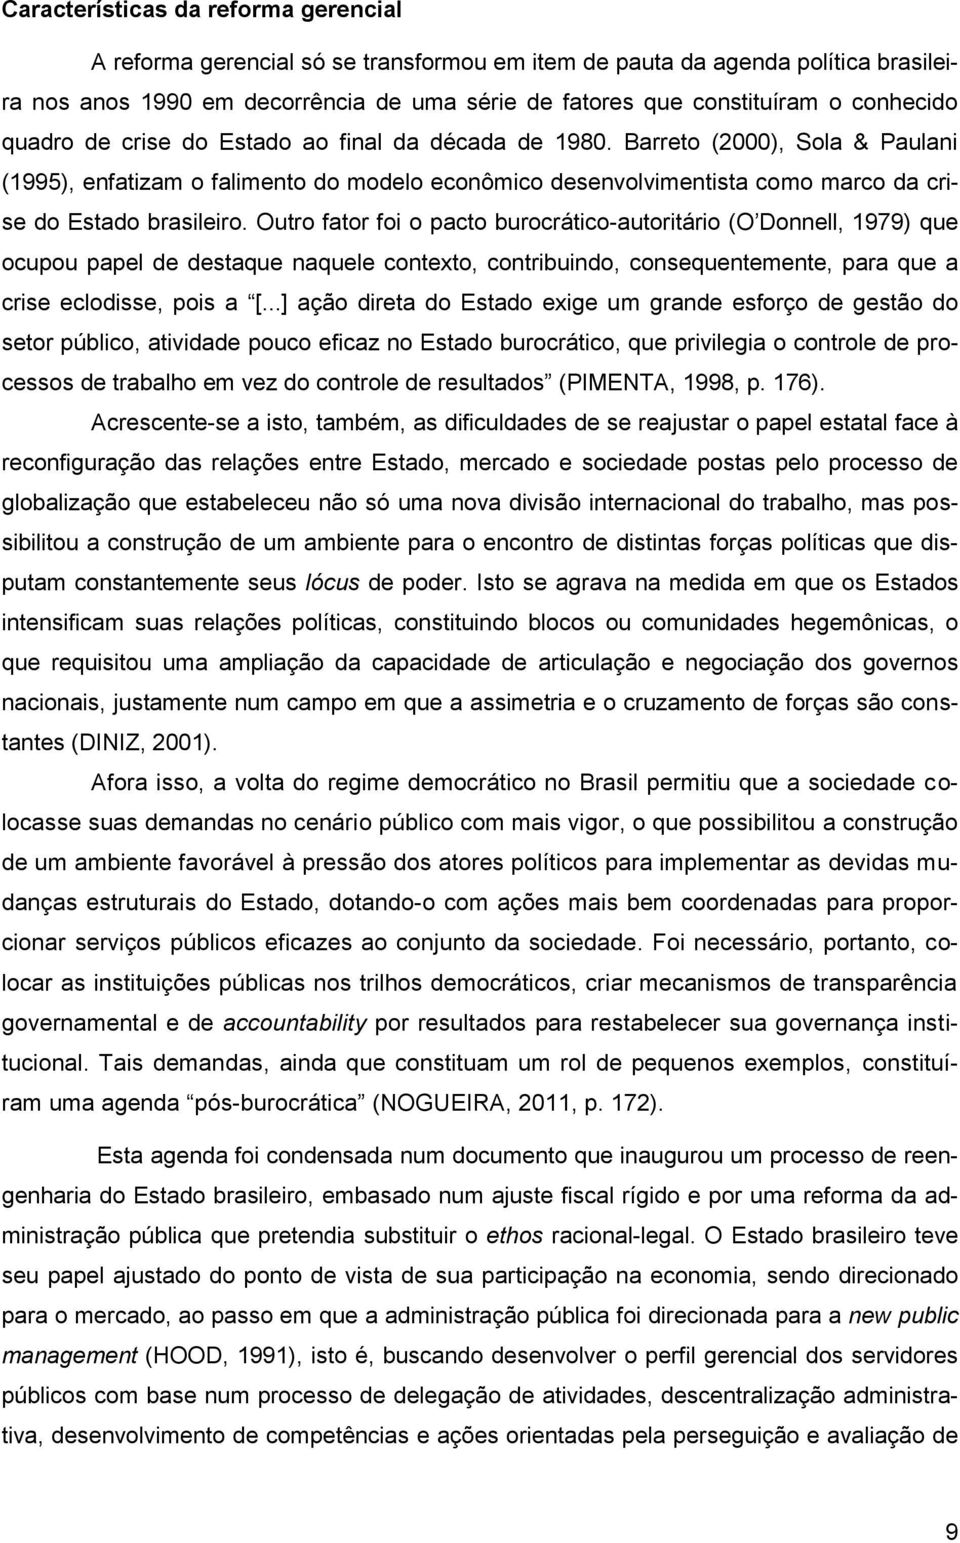 Barreto (2000), Sola & Paulani (1995), enfatizam o falimento do modelo econômico desenvolvimentista como marco da crise do Estado brasileiro.